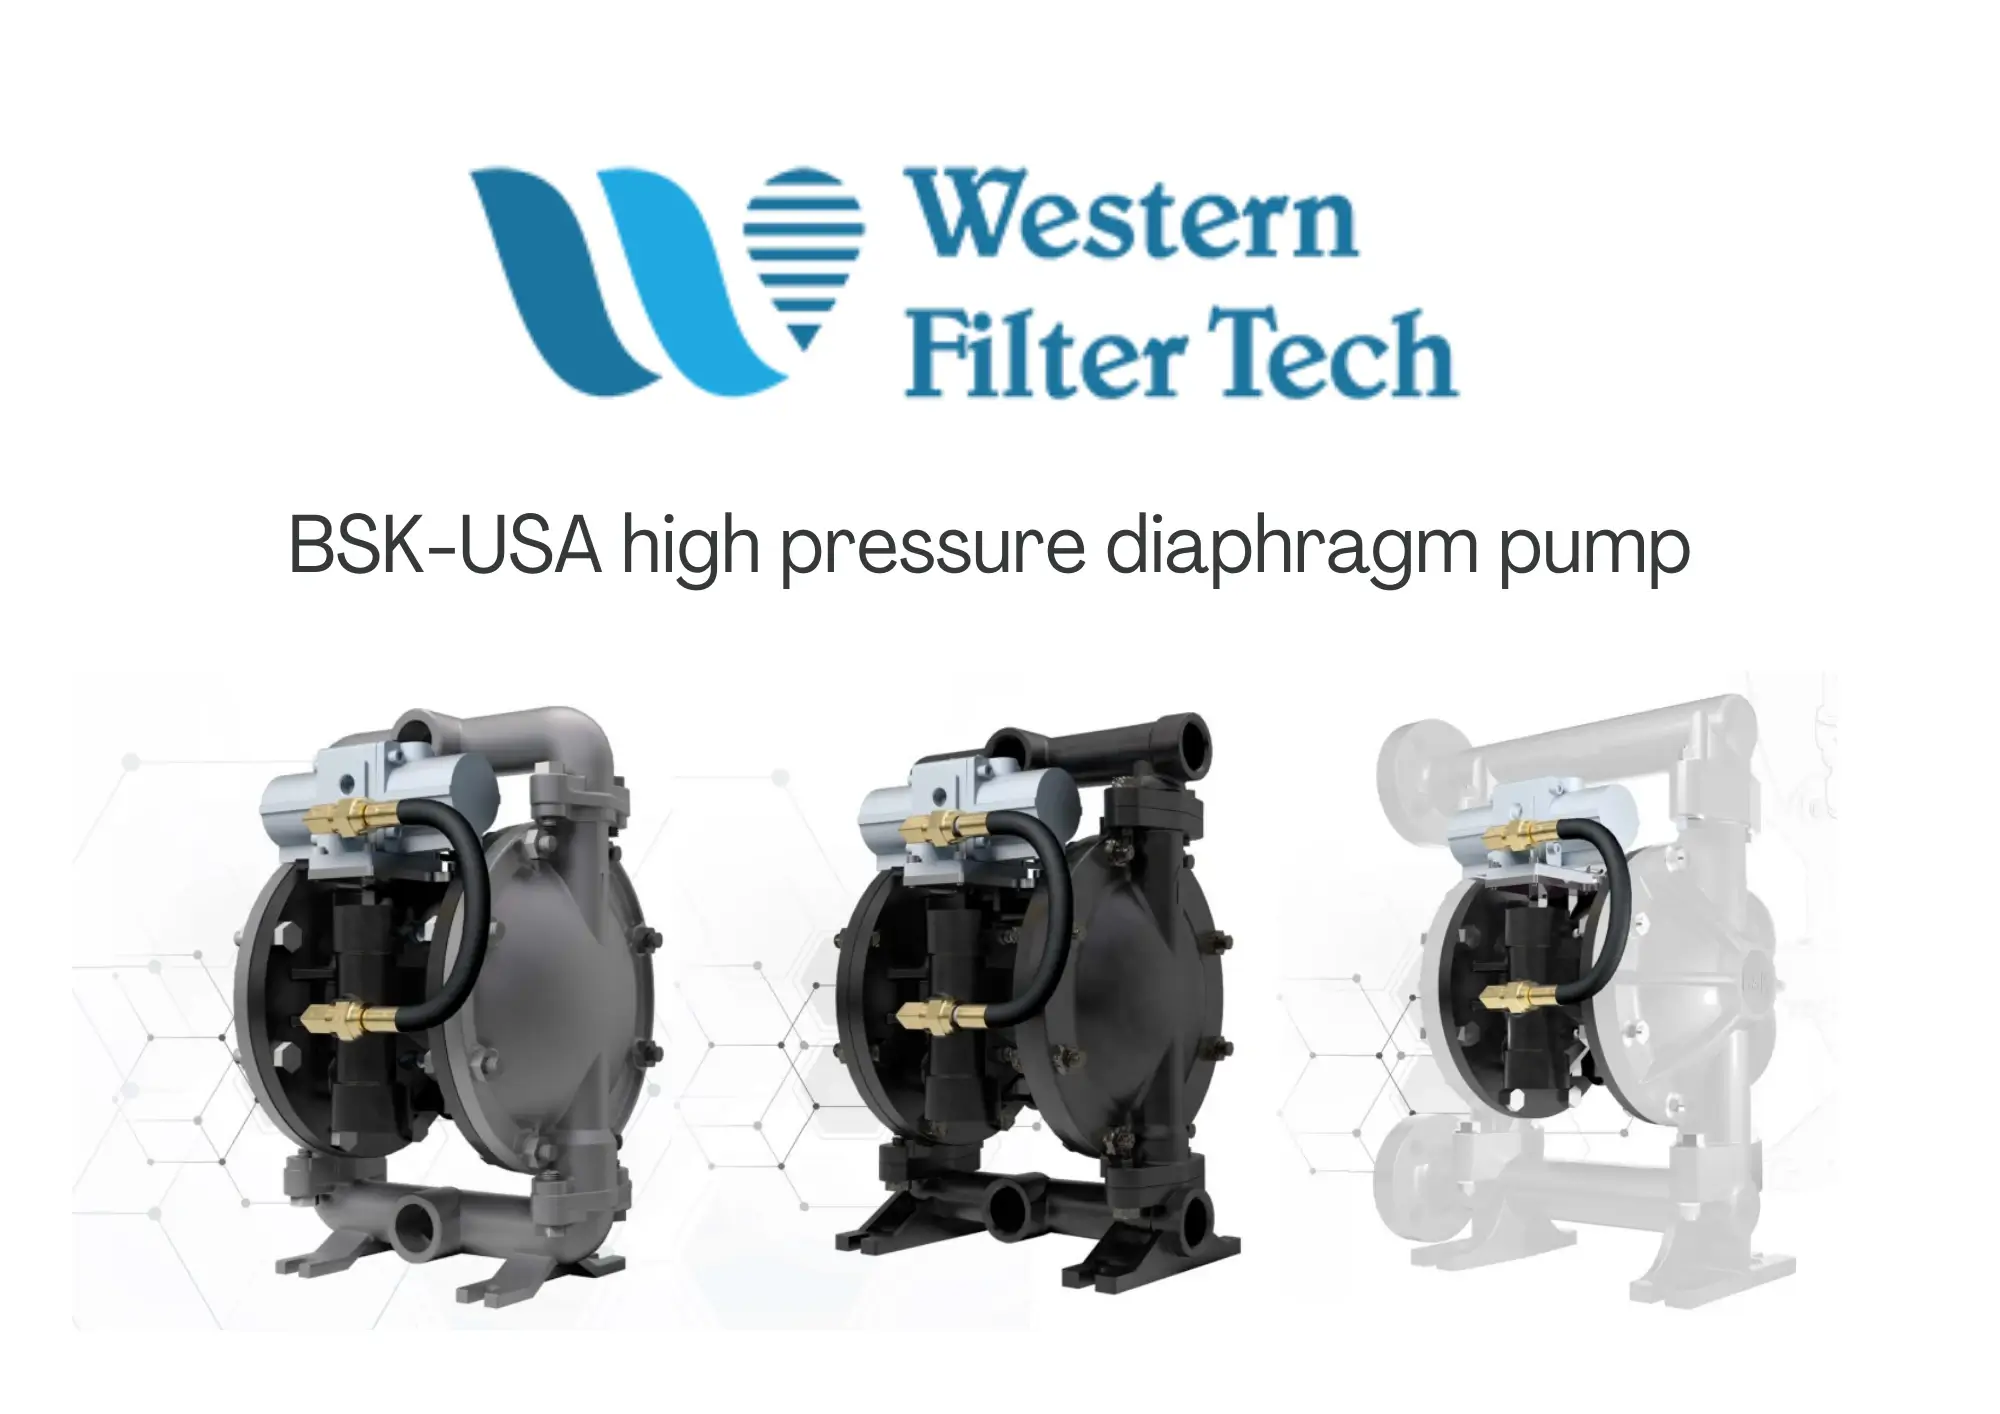 BSK high pressure diaphragm pump 1 inch Series - Western Filter Tech